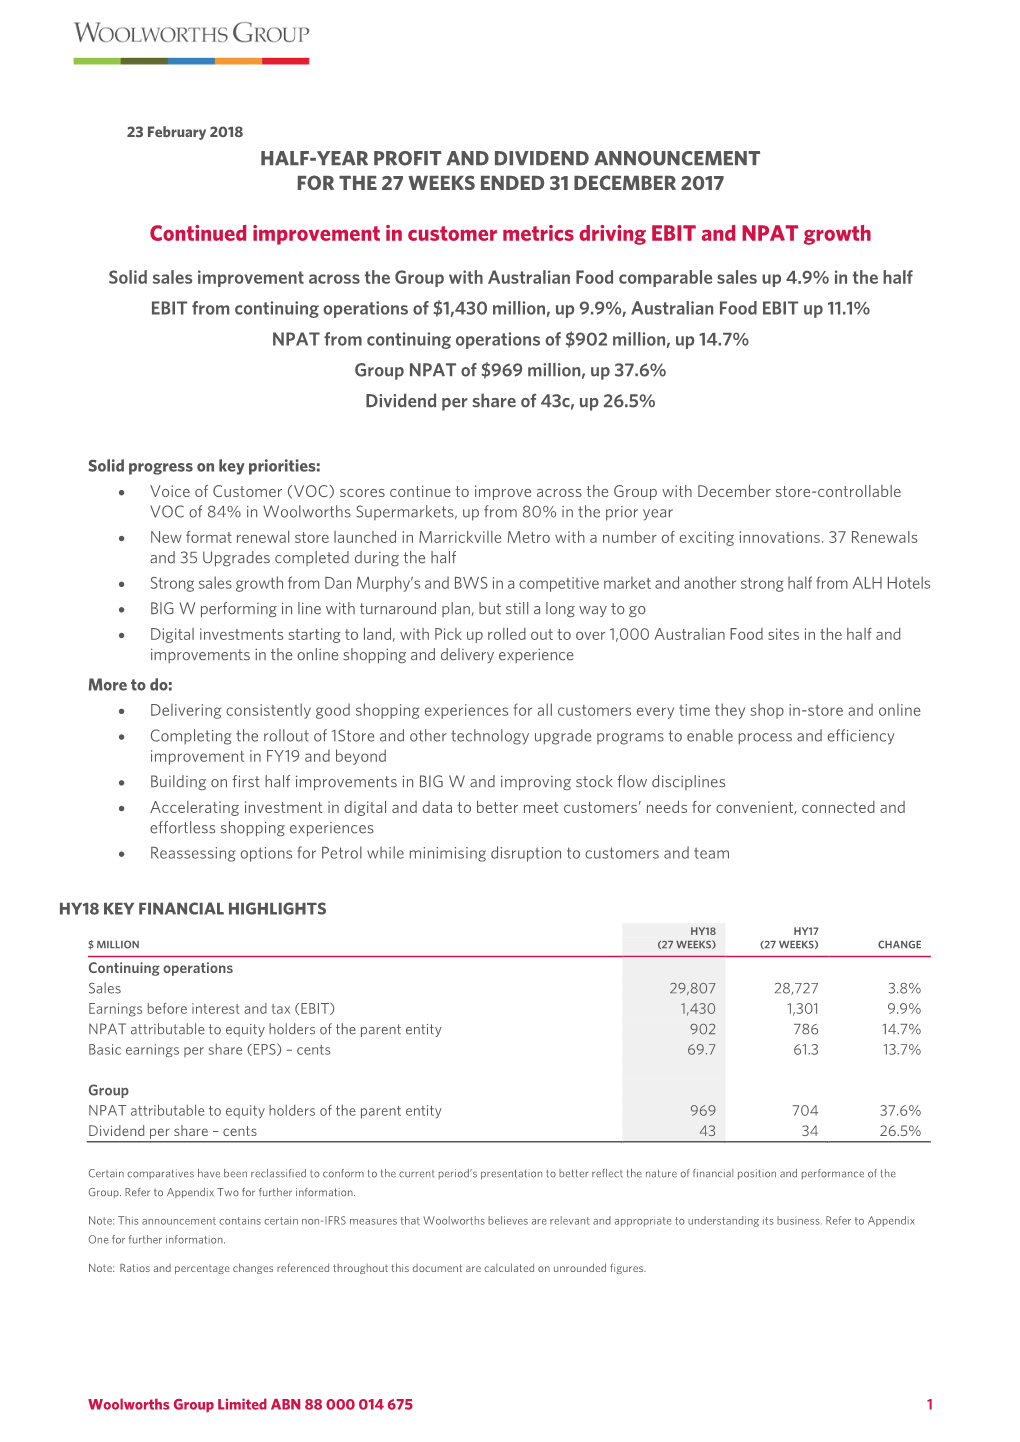 Continued Improvement in Customer Metrics Driving EBIT and NPAT Growth